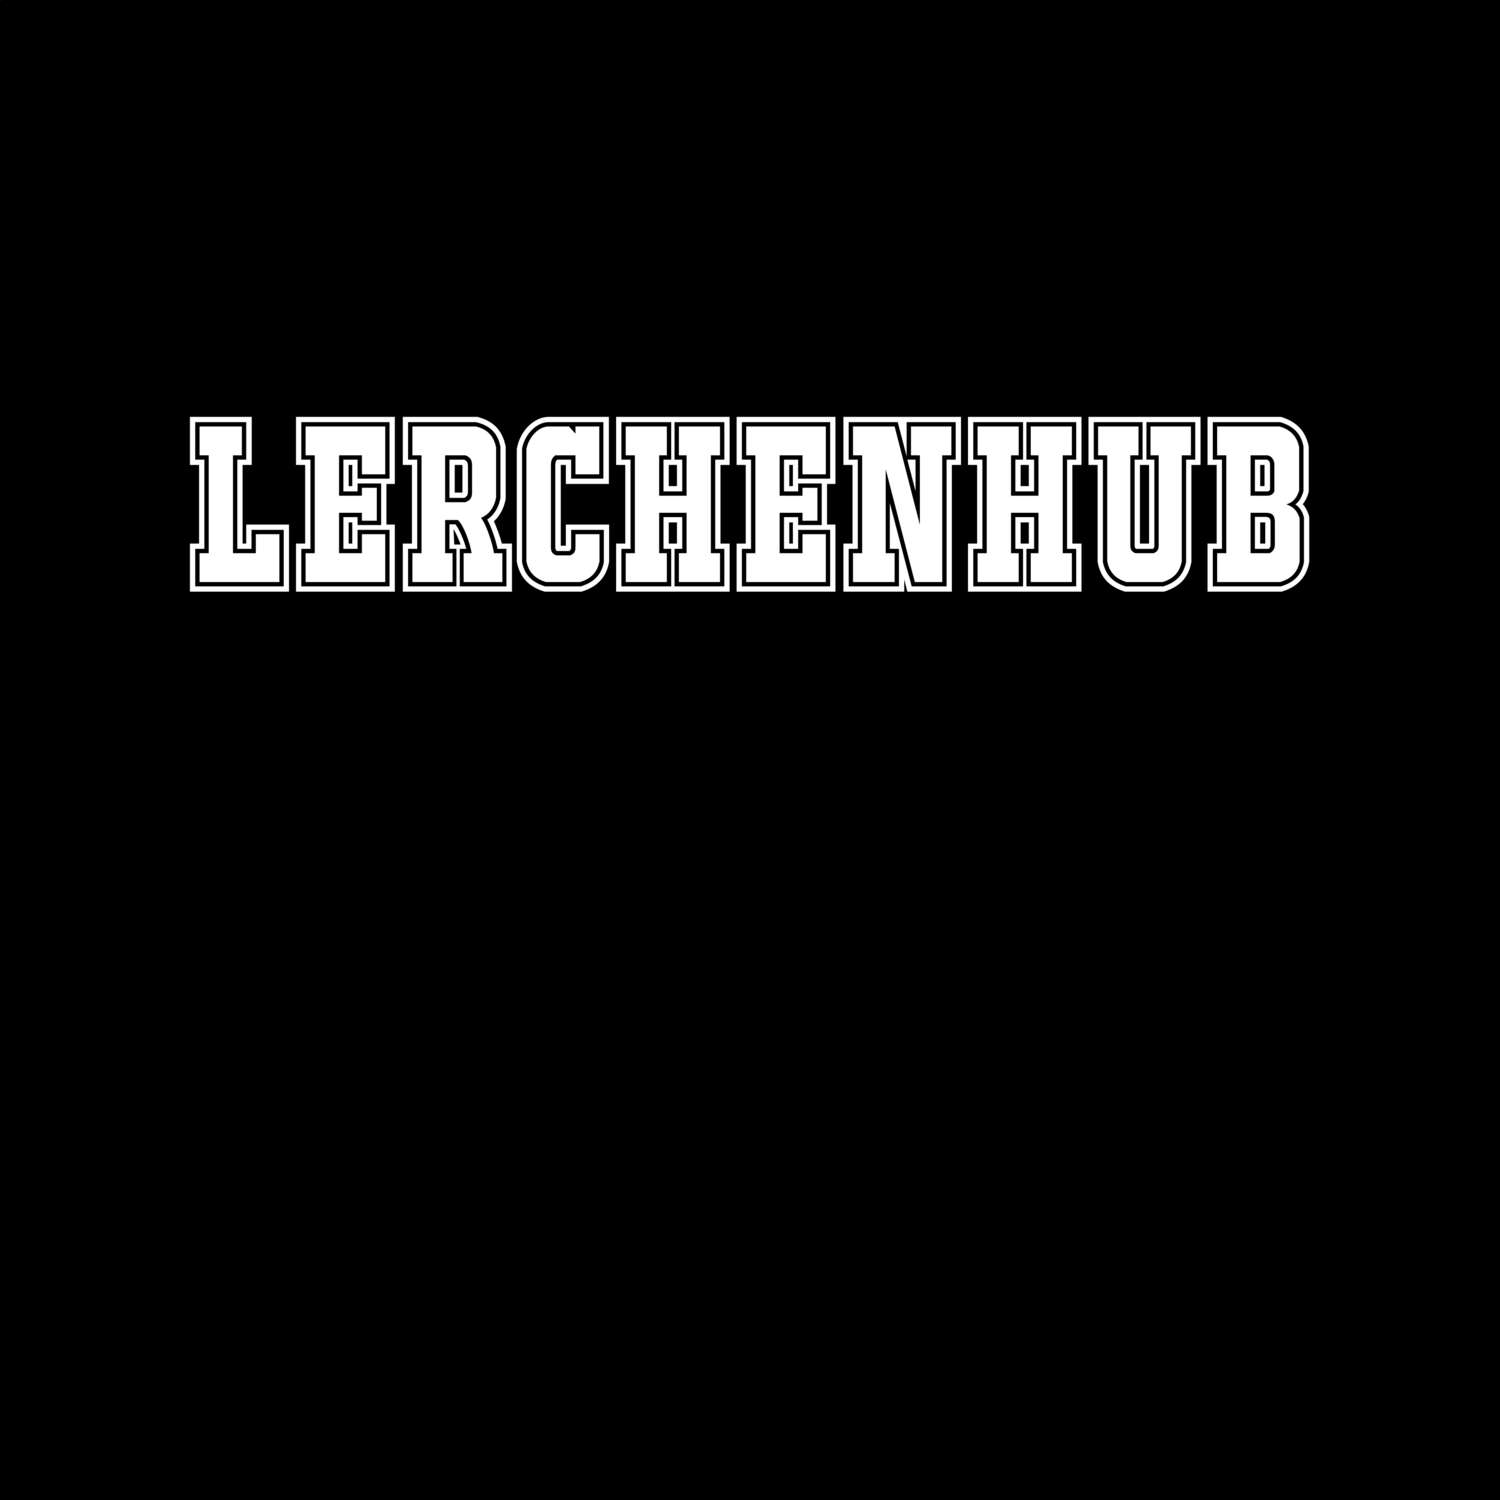 Lerchenhub T-Shirt »Classic«